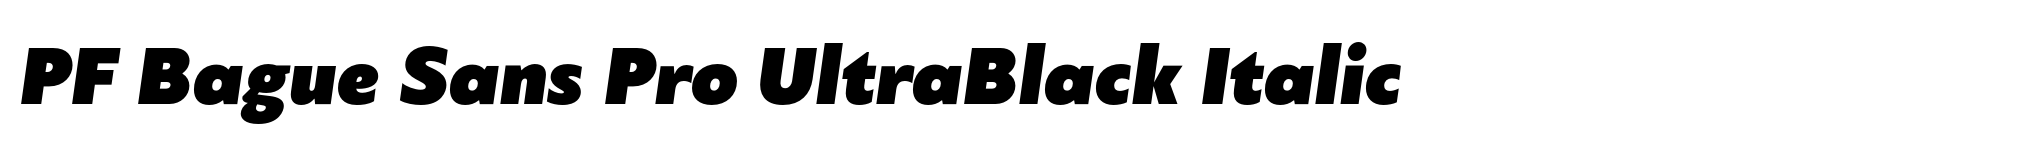 PF Bague Sans Pro UltraBlack Italic image